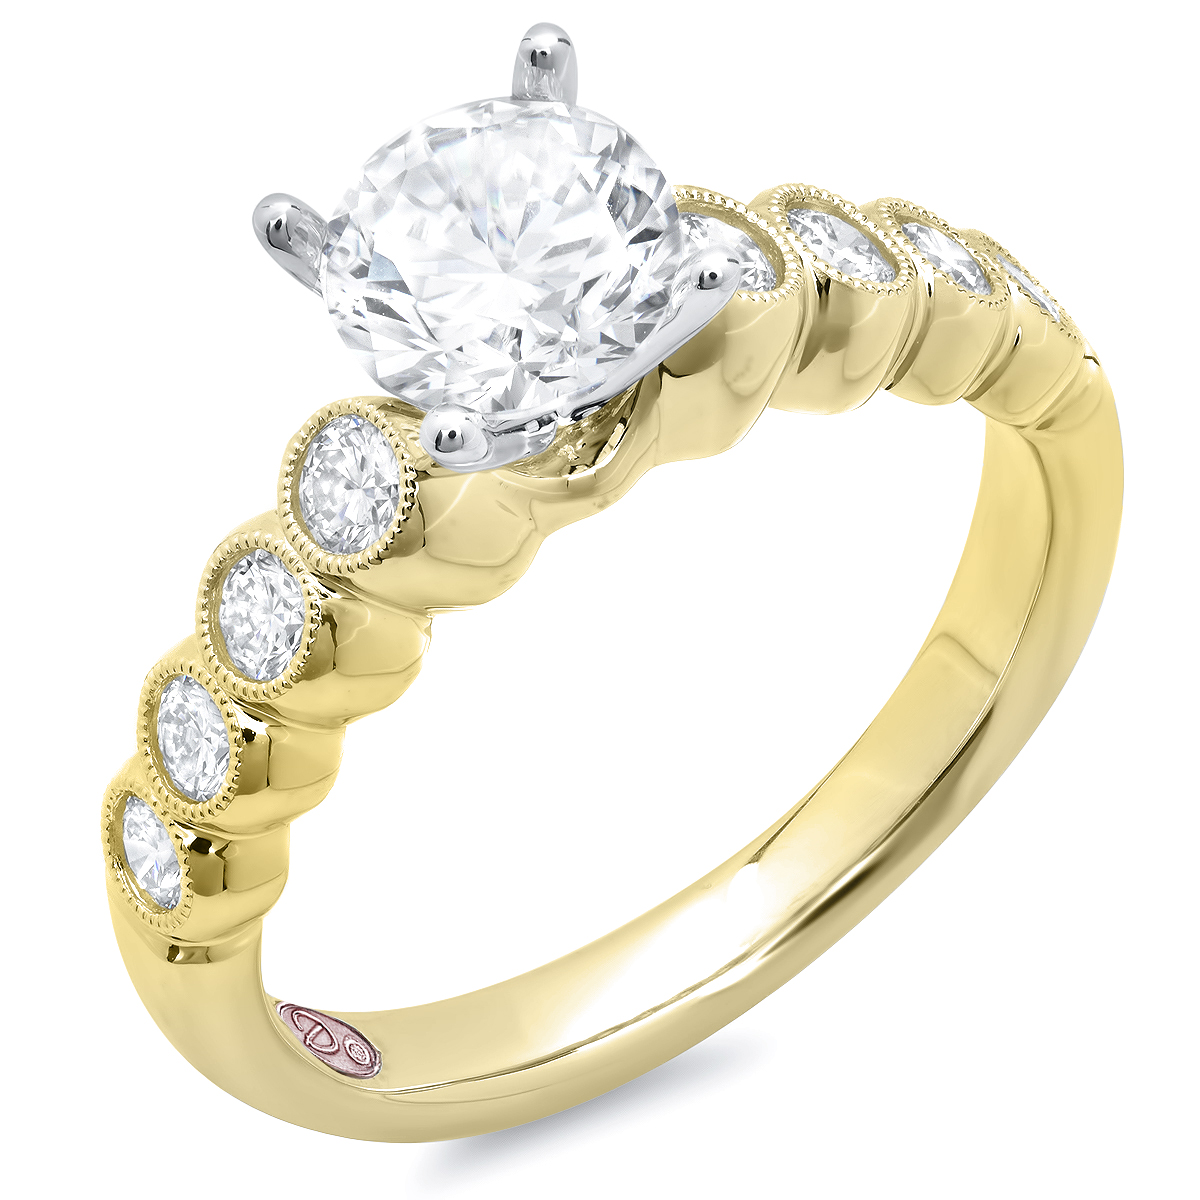 Designer Engagement Rings - DW7616